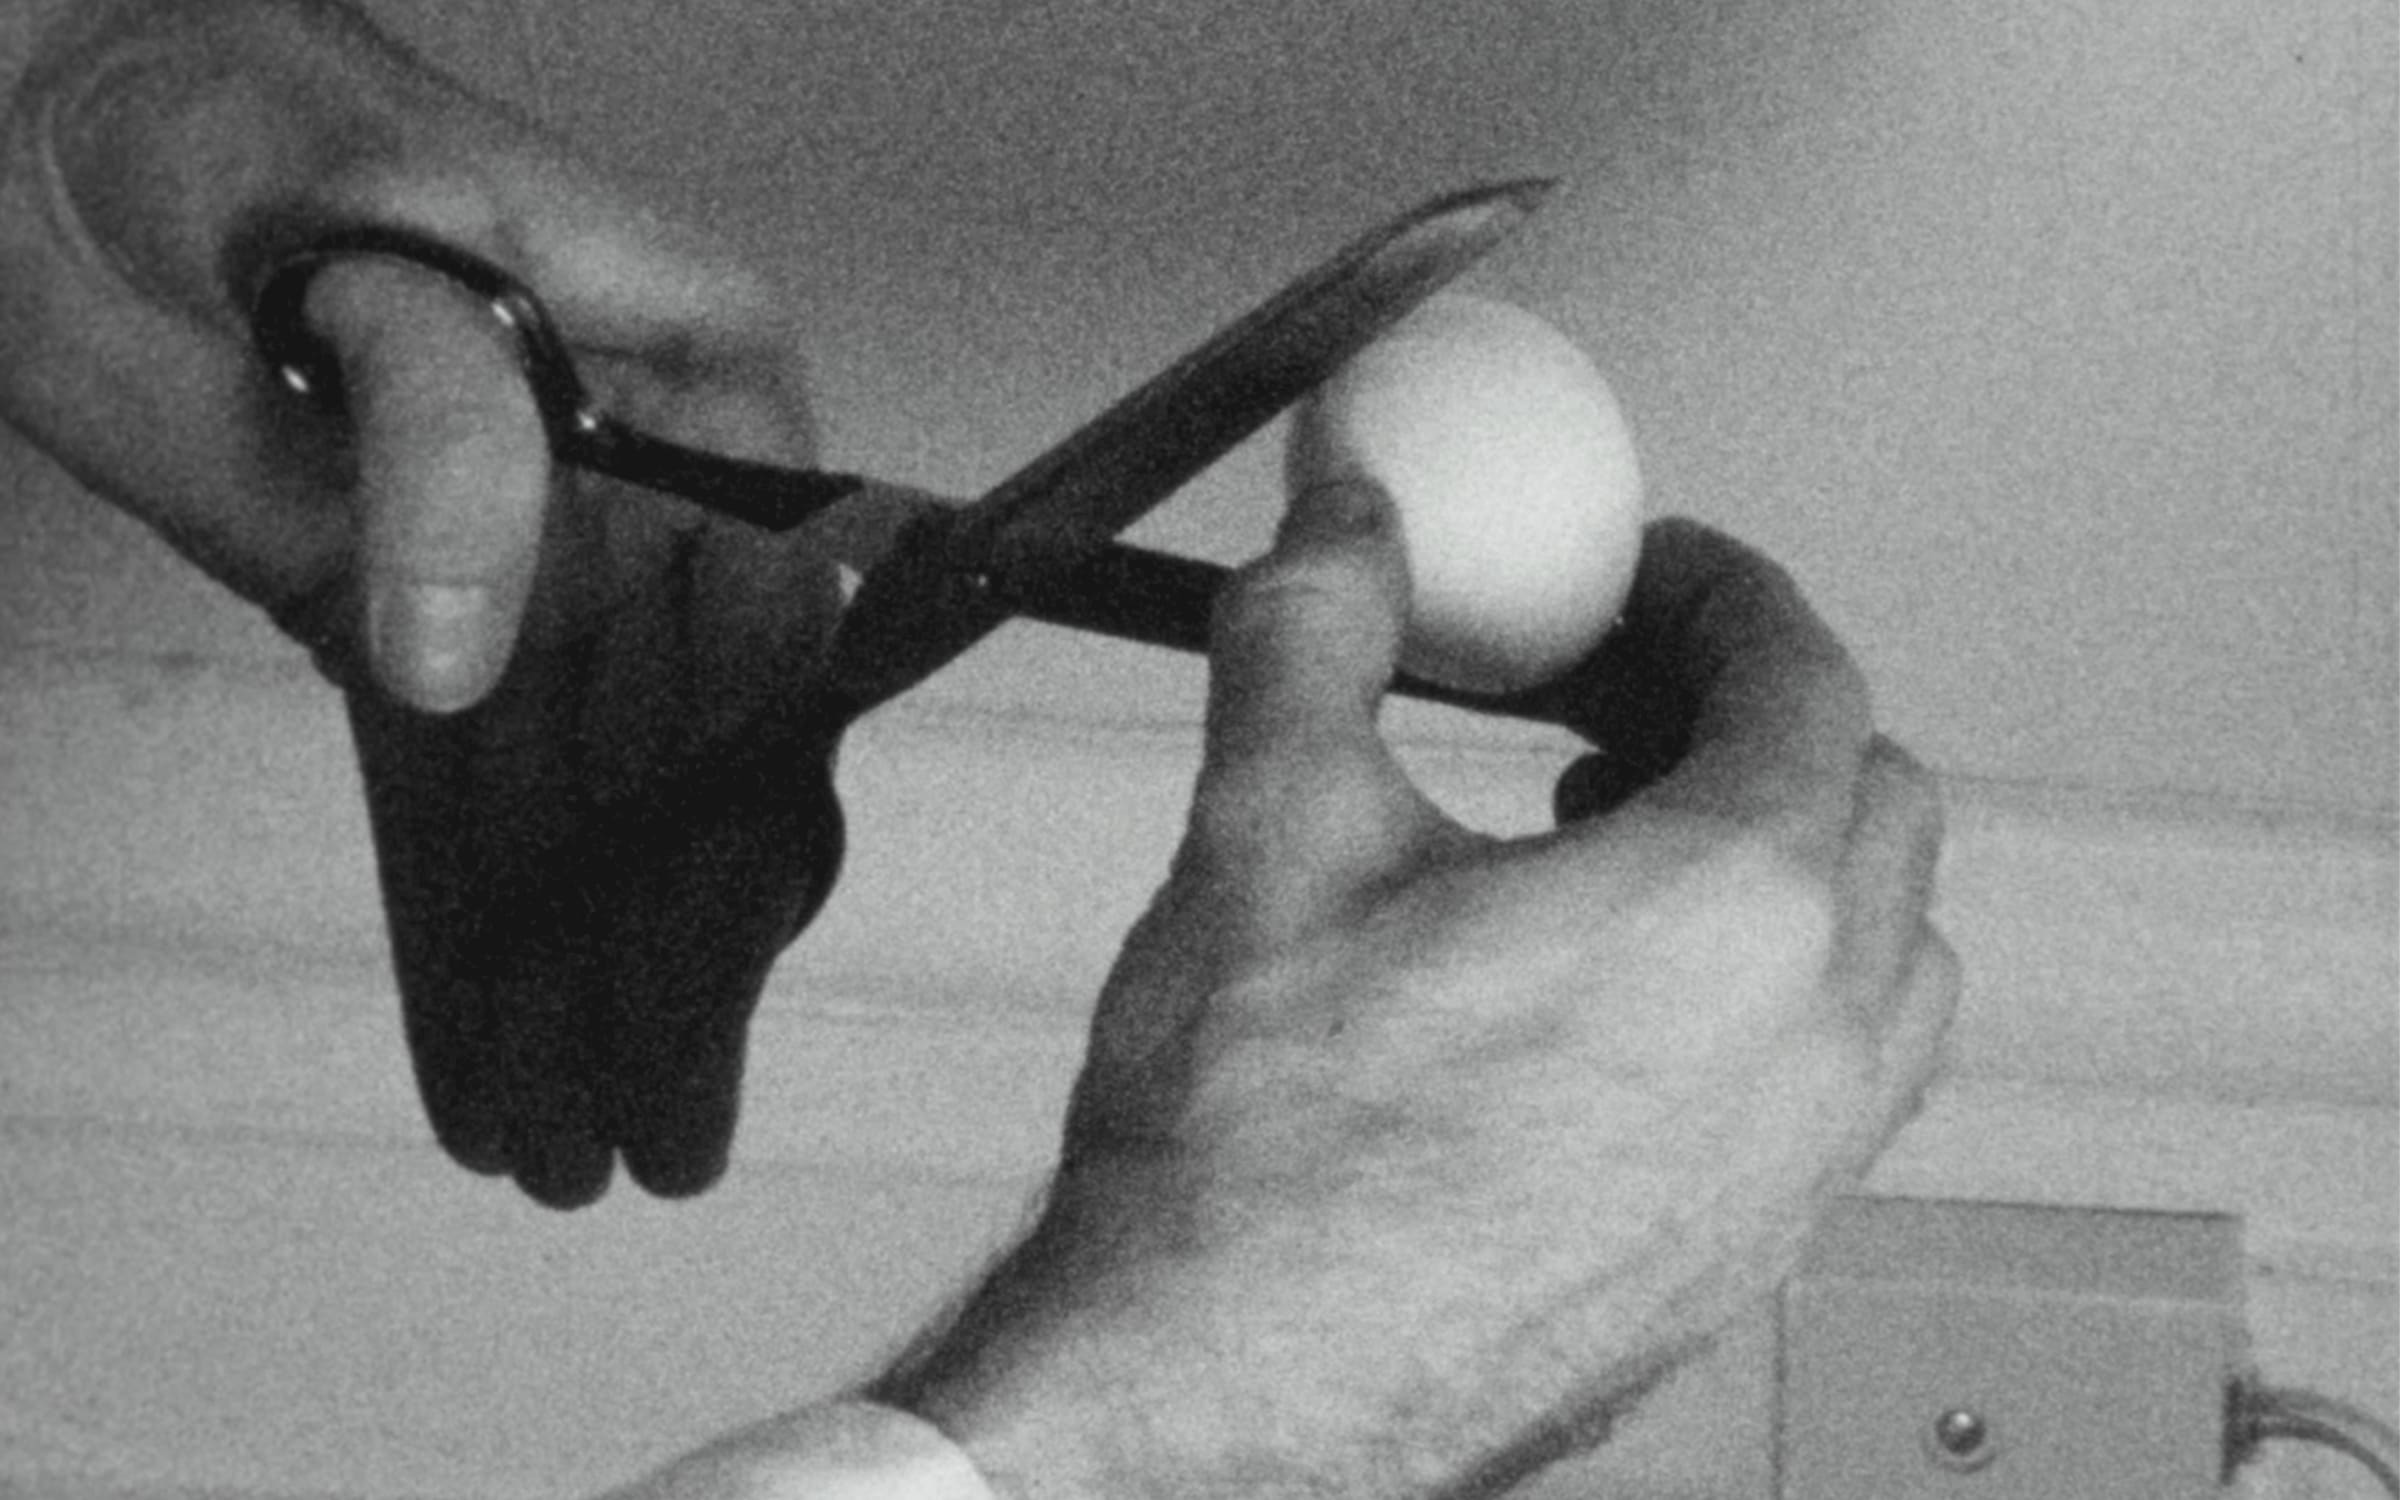 Rirkrit Tiravanija, The Scissor That Had Found Its Own Pair, short film, 07’39”, 1985. Courtesy of the artist.